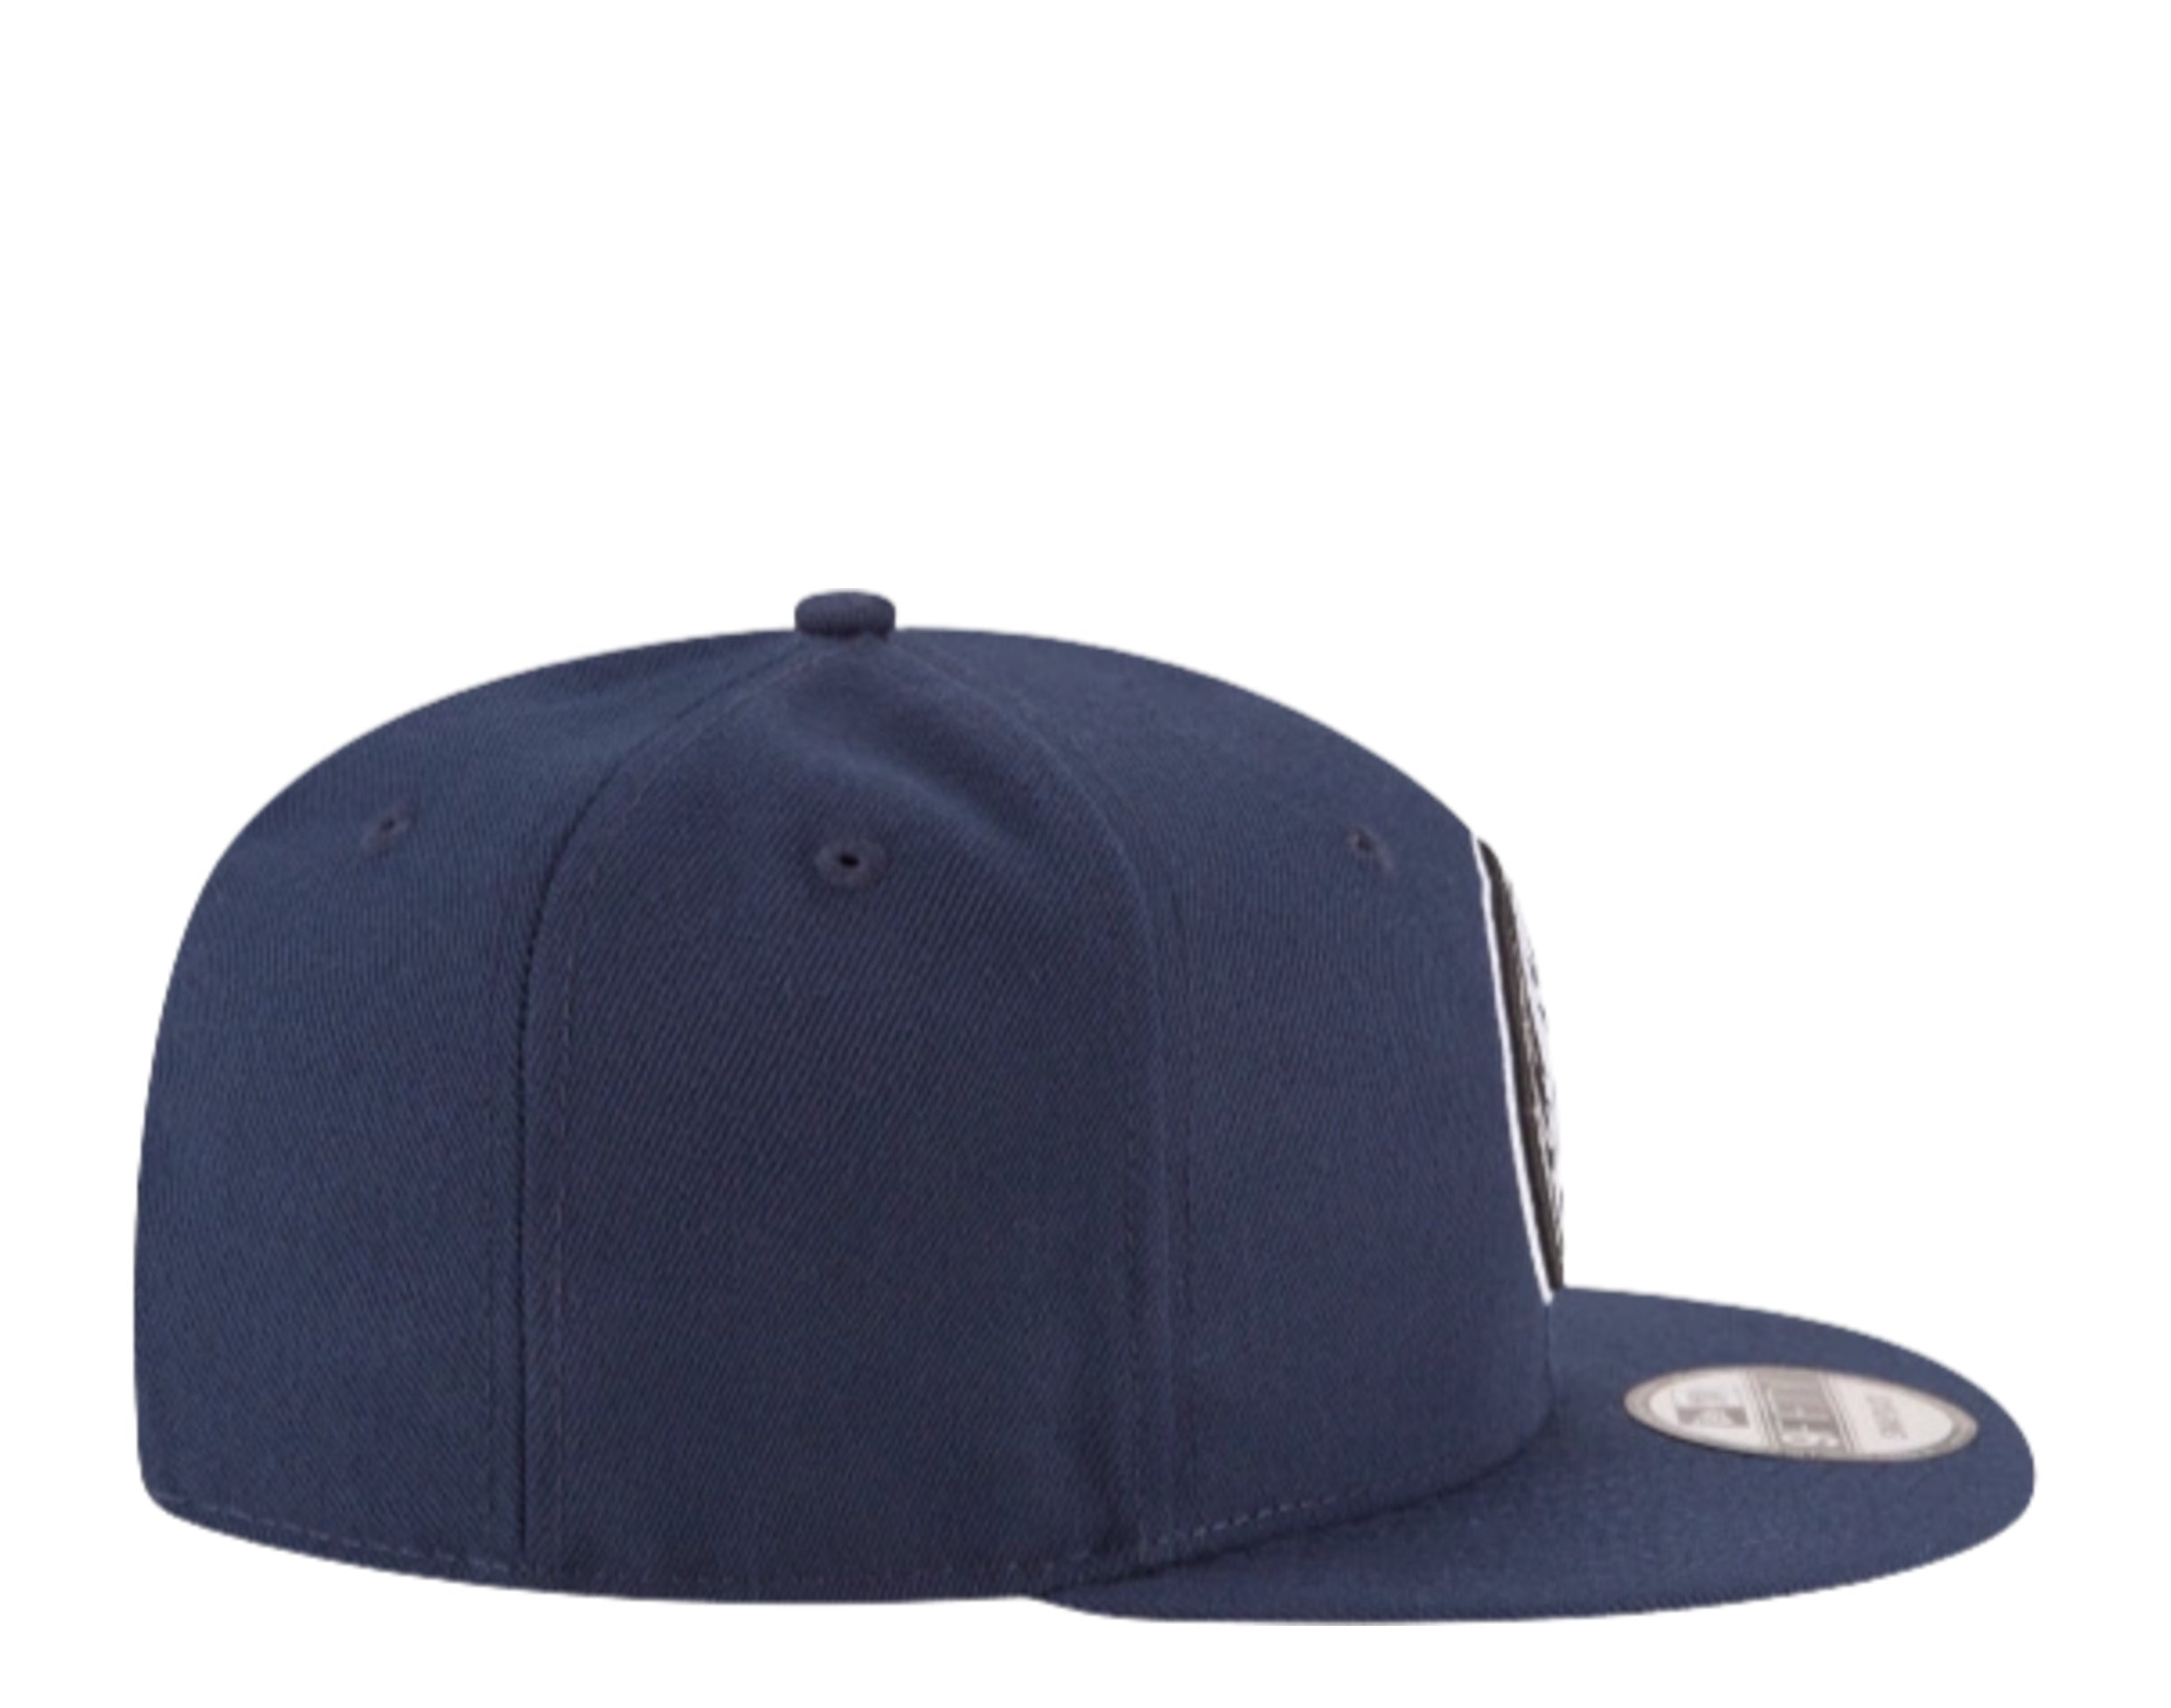 Emmett O'Brien New Era Original Snapback Flat Brim Hat – Team